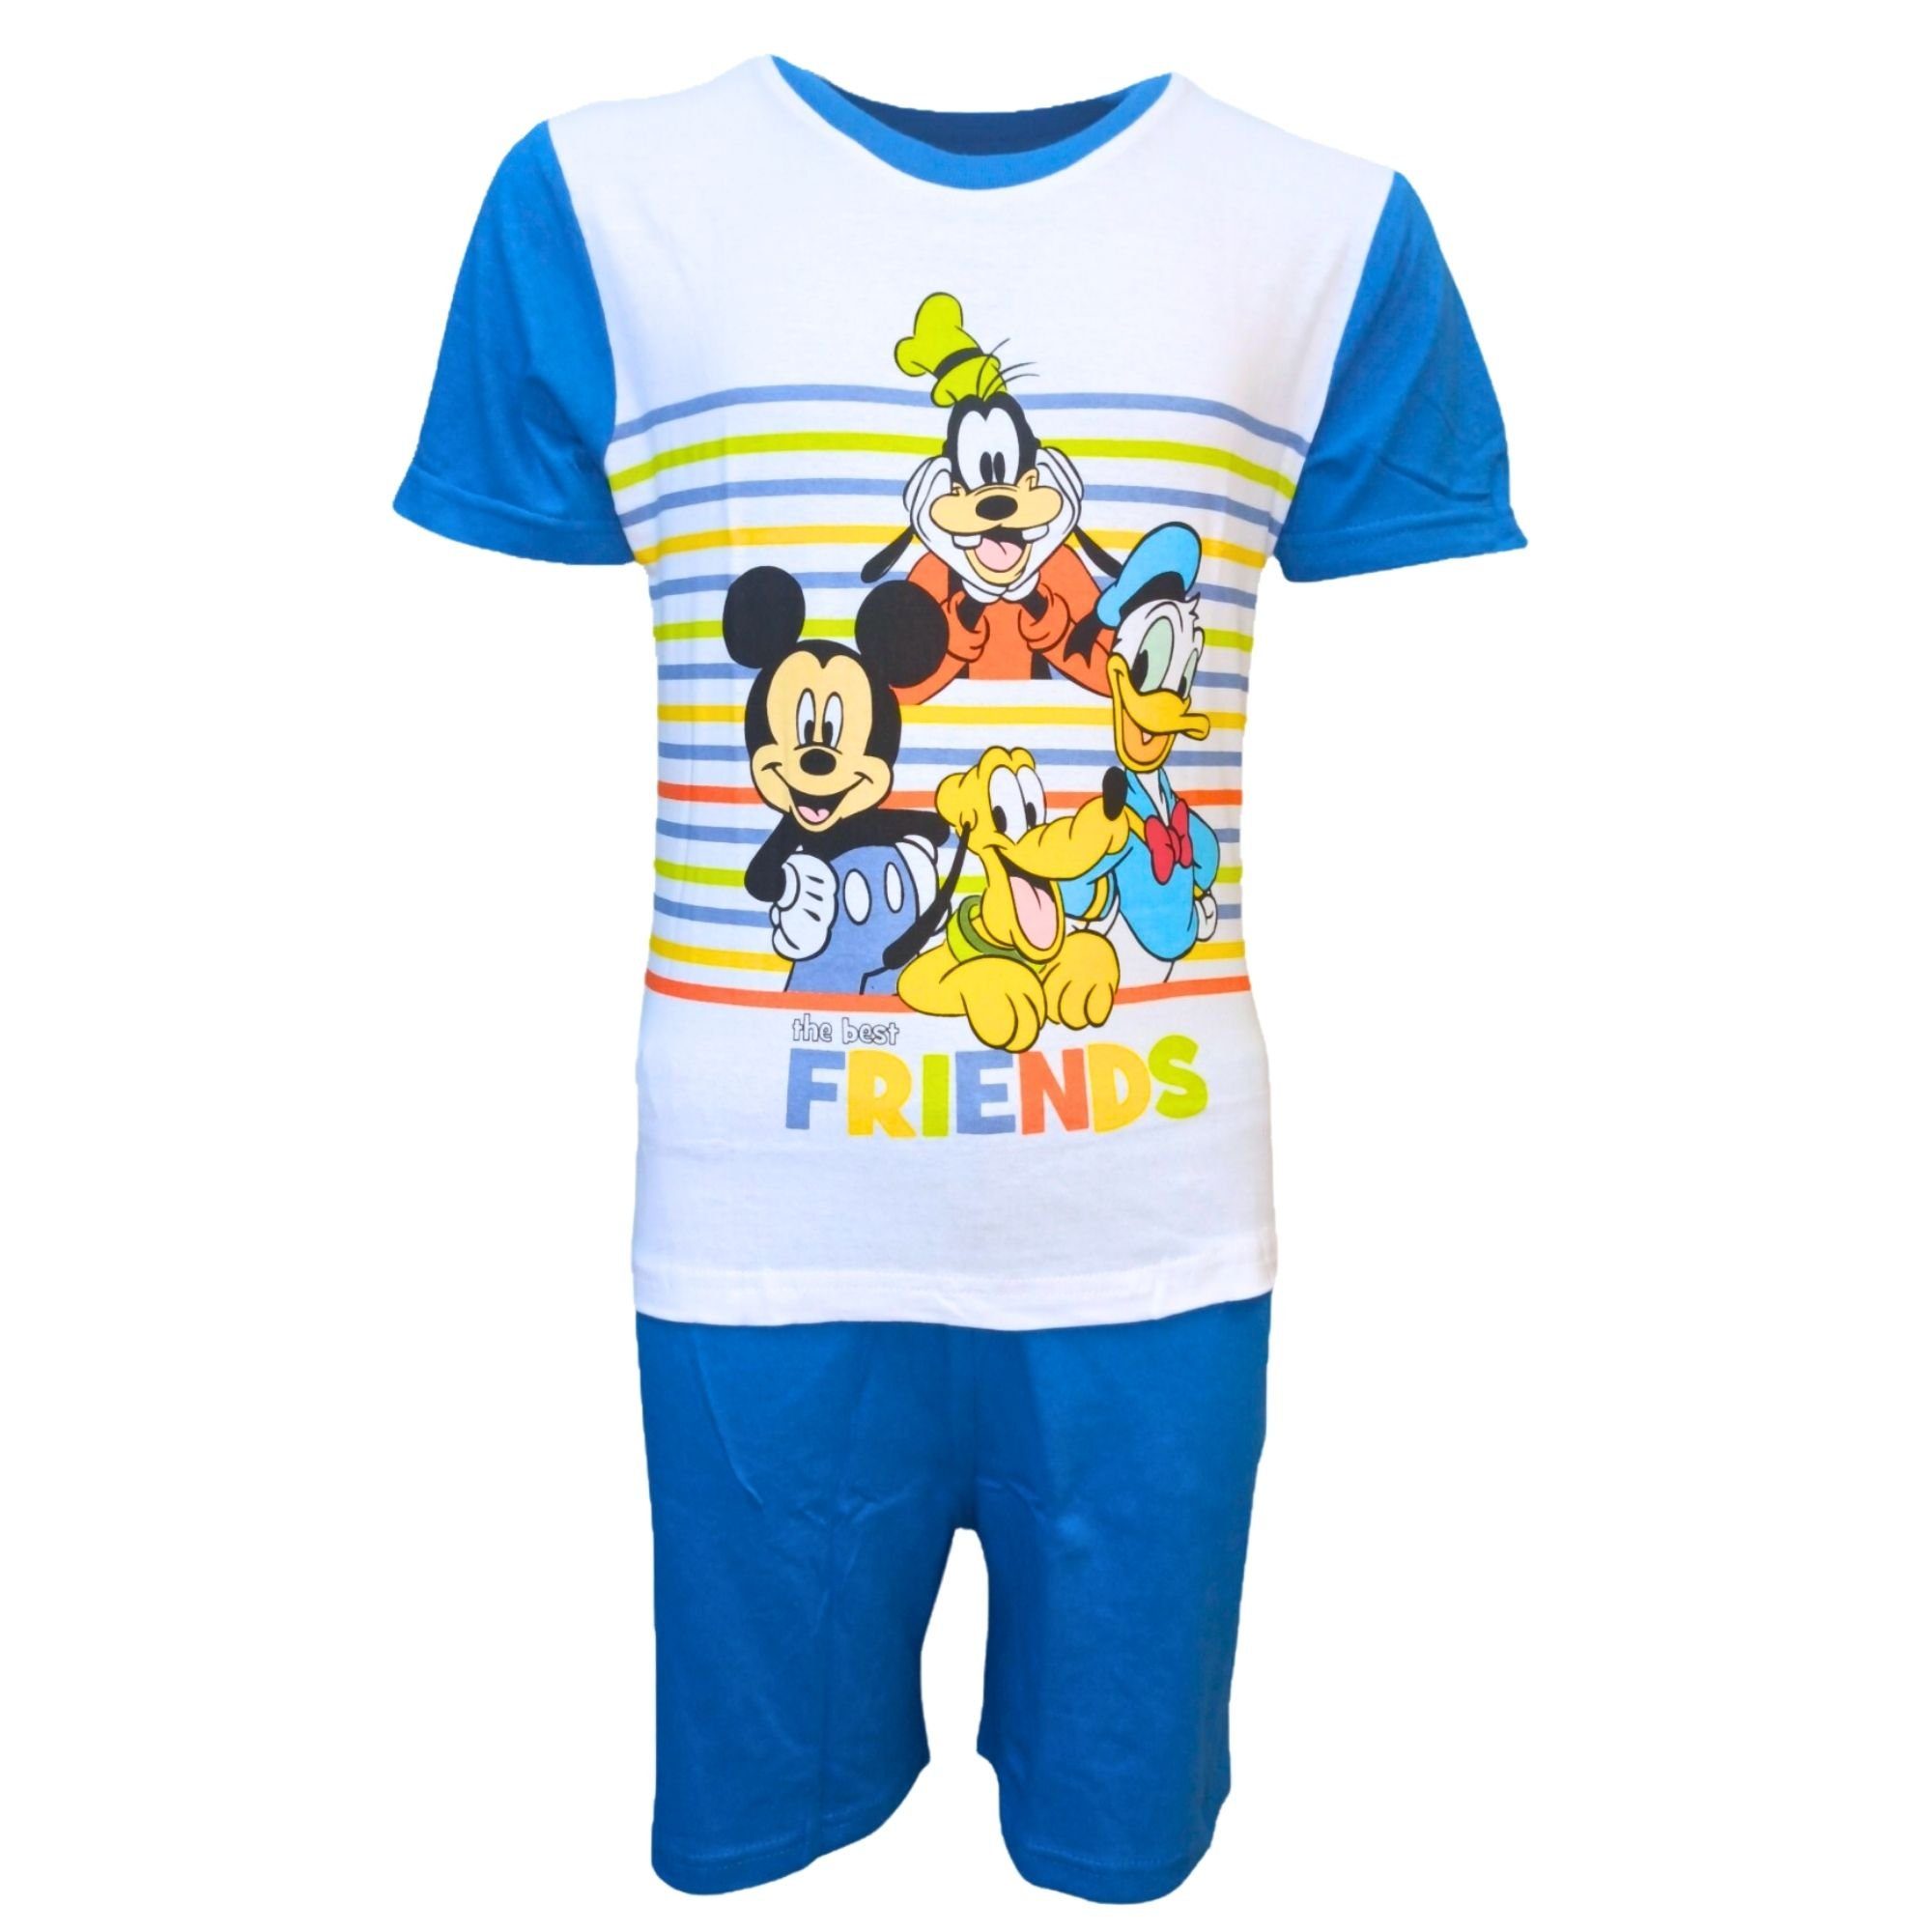 Set THE Shorty tlg) Pyjama Blau BEST cm 98-128 Jungen FRIENDS kurz Schlafanzug Gr. (2 Disney -